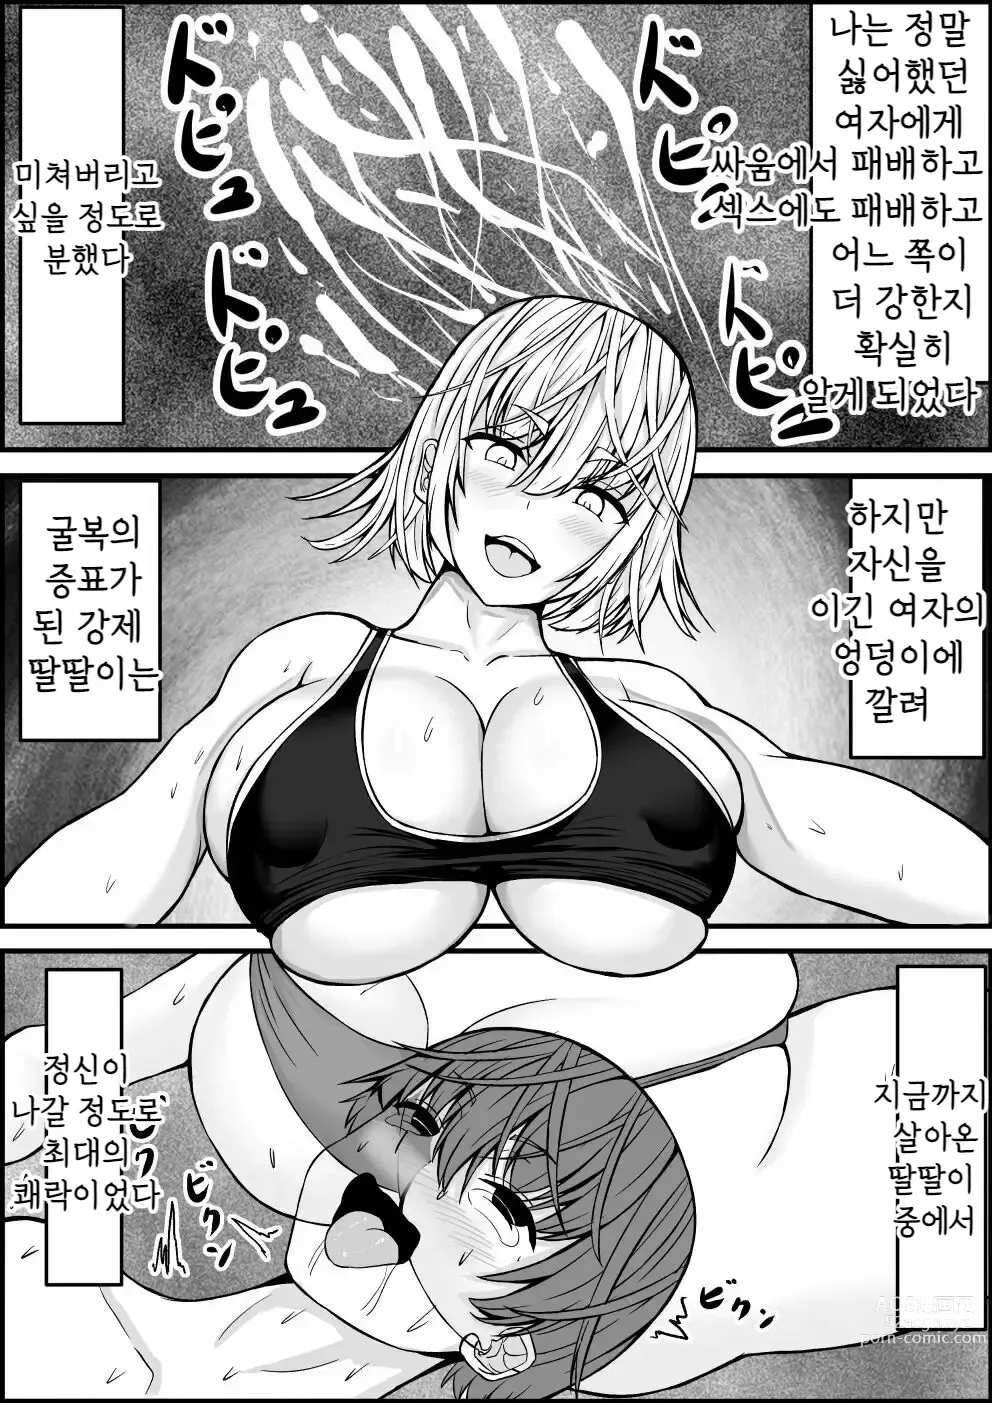 Page 61 of doujinshi 에로패배